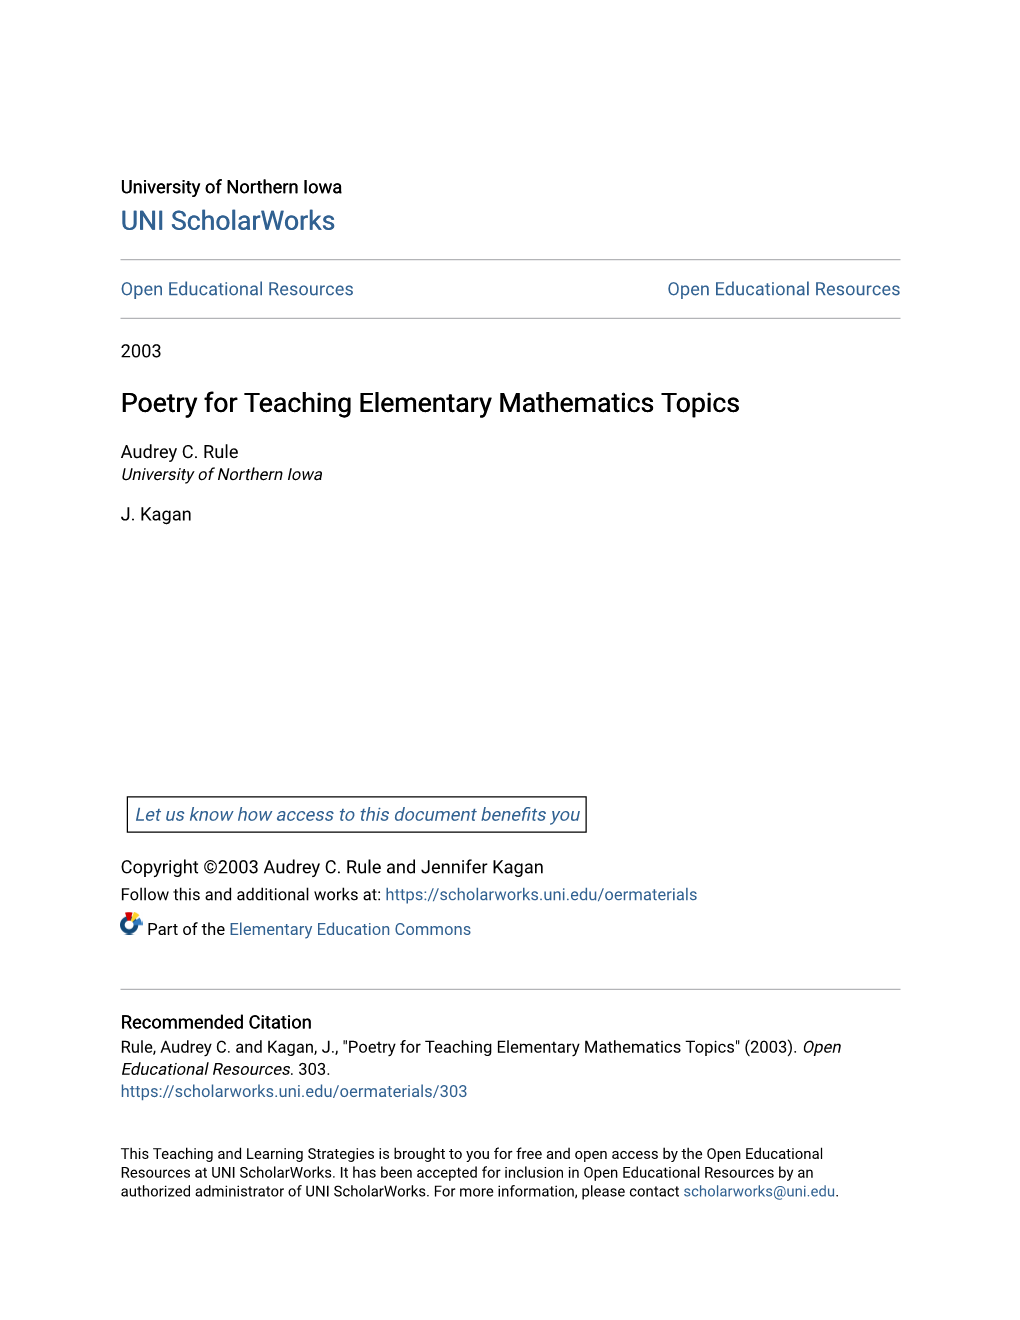 Poetry for Teaching Elementary Mathematics Topics